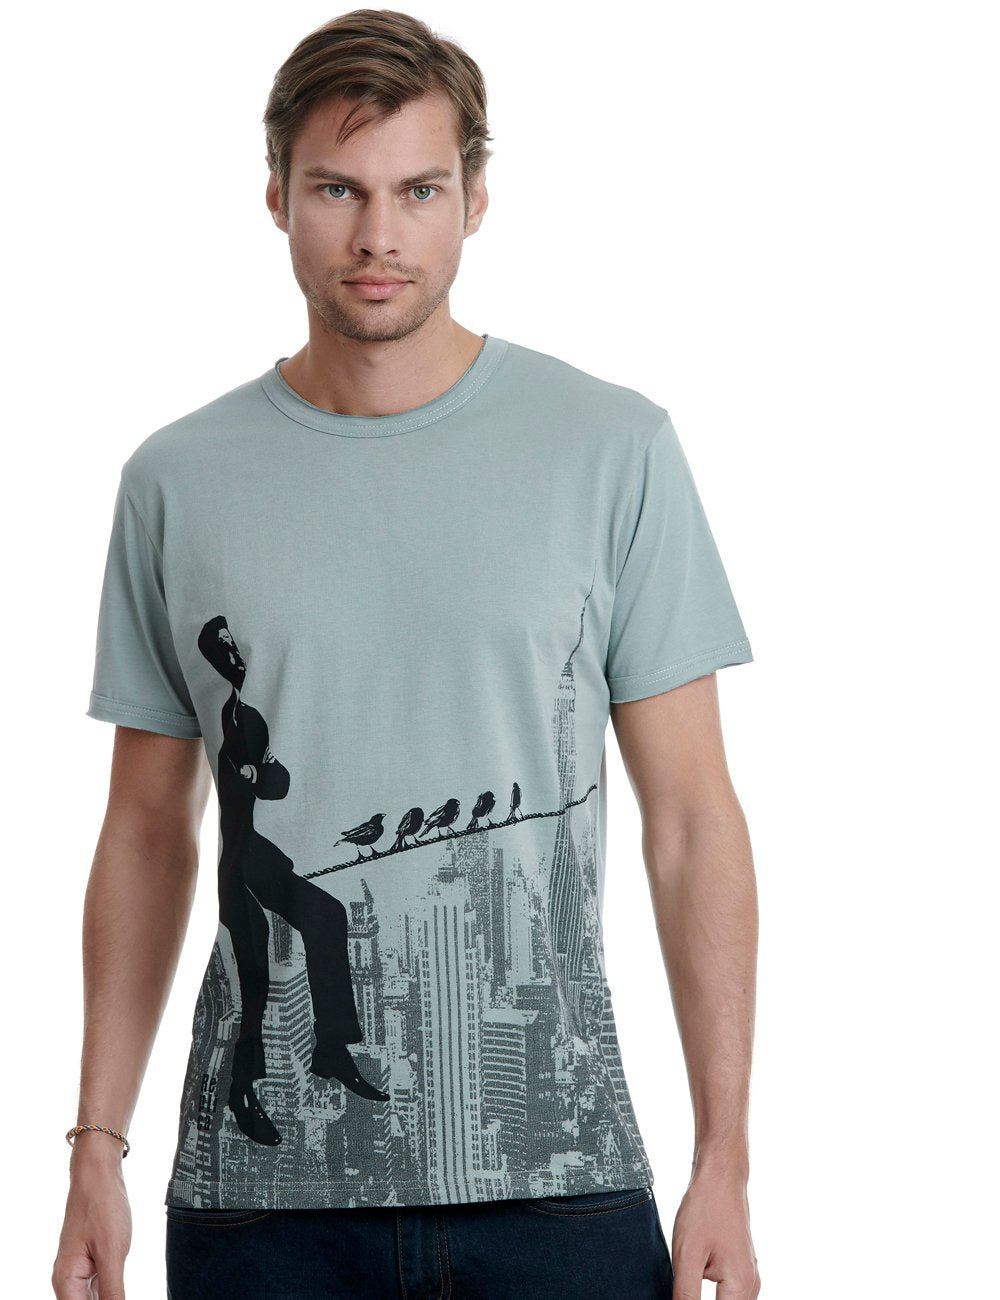 Skyline Replica tshirt Greece grey